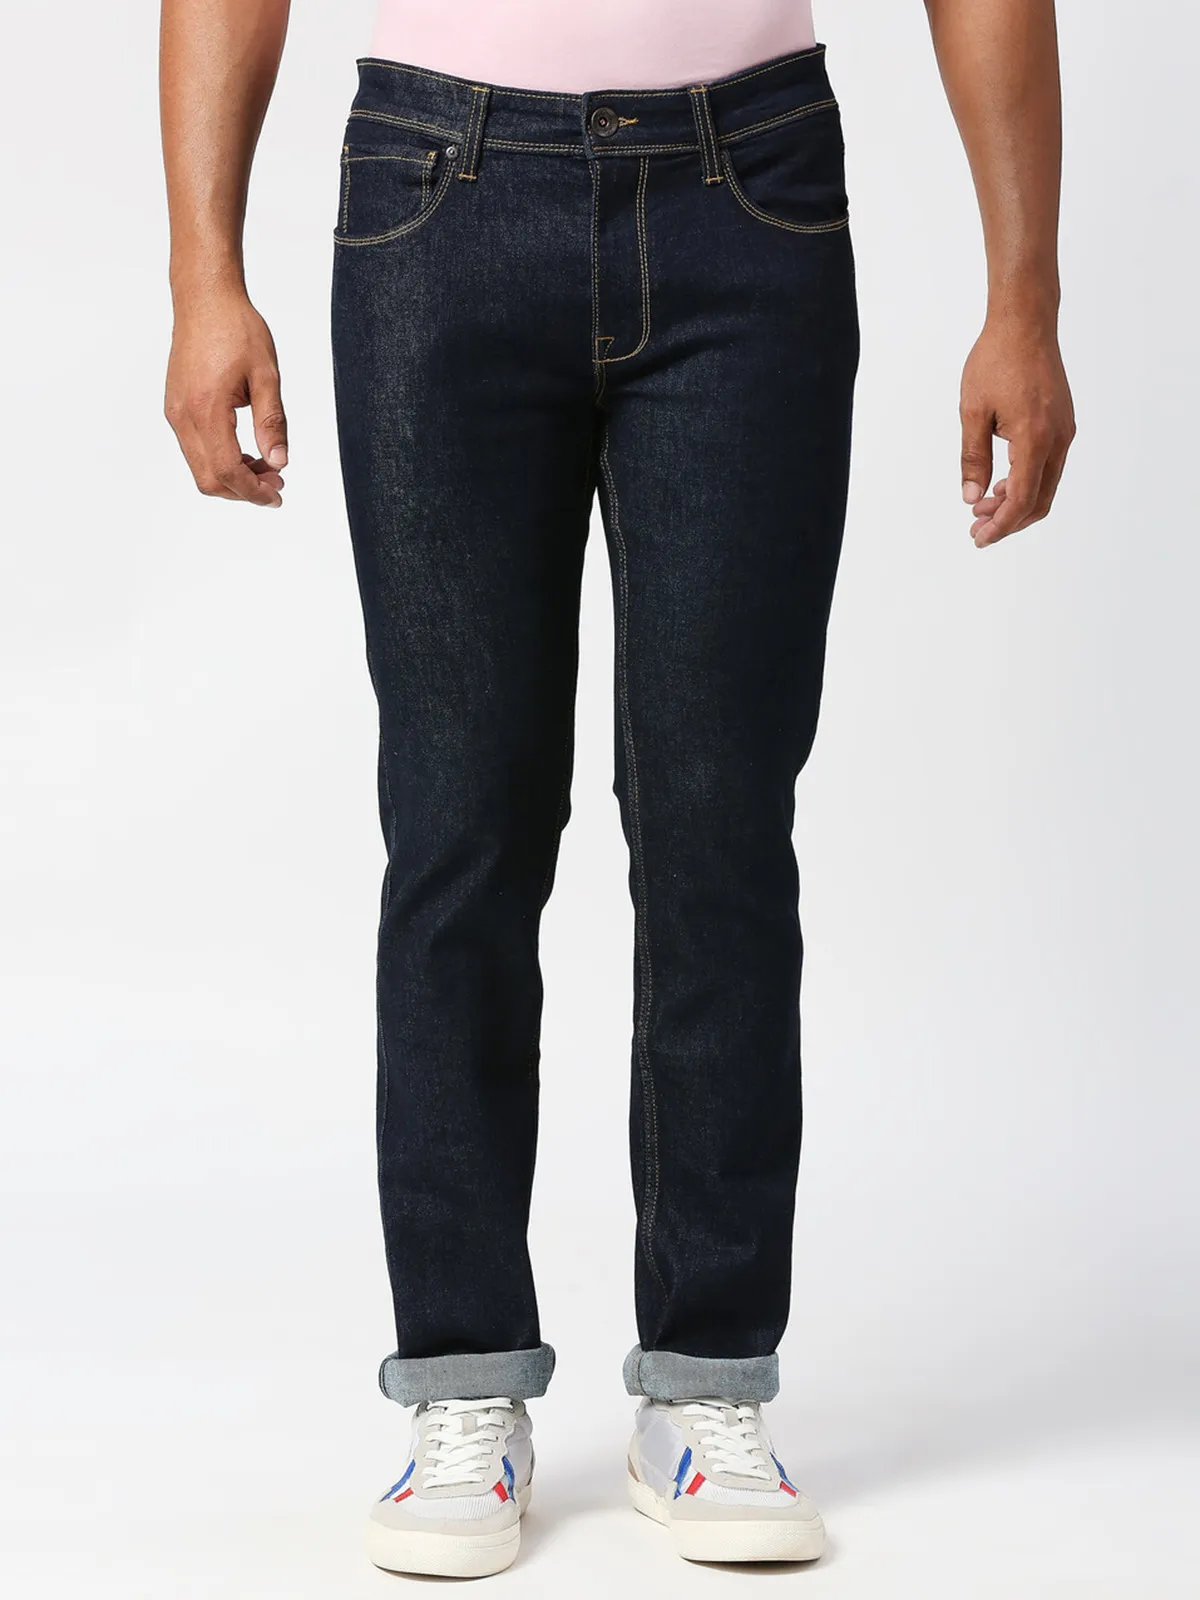 PEPE JEANS dark navy solid denim jeans